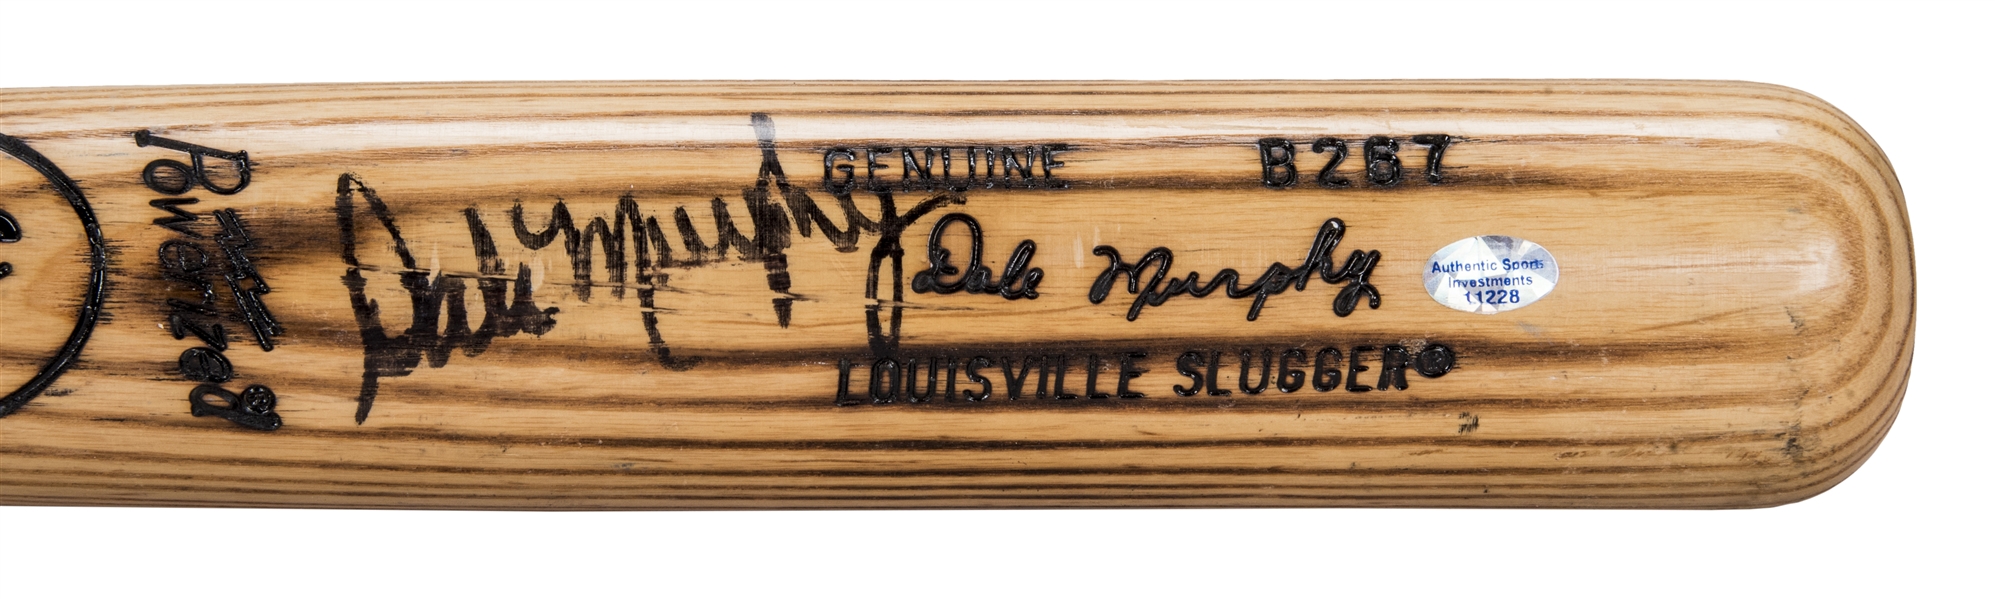 Dale Murphy Signed 1970's Louisville Slugger Game Used Baseball